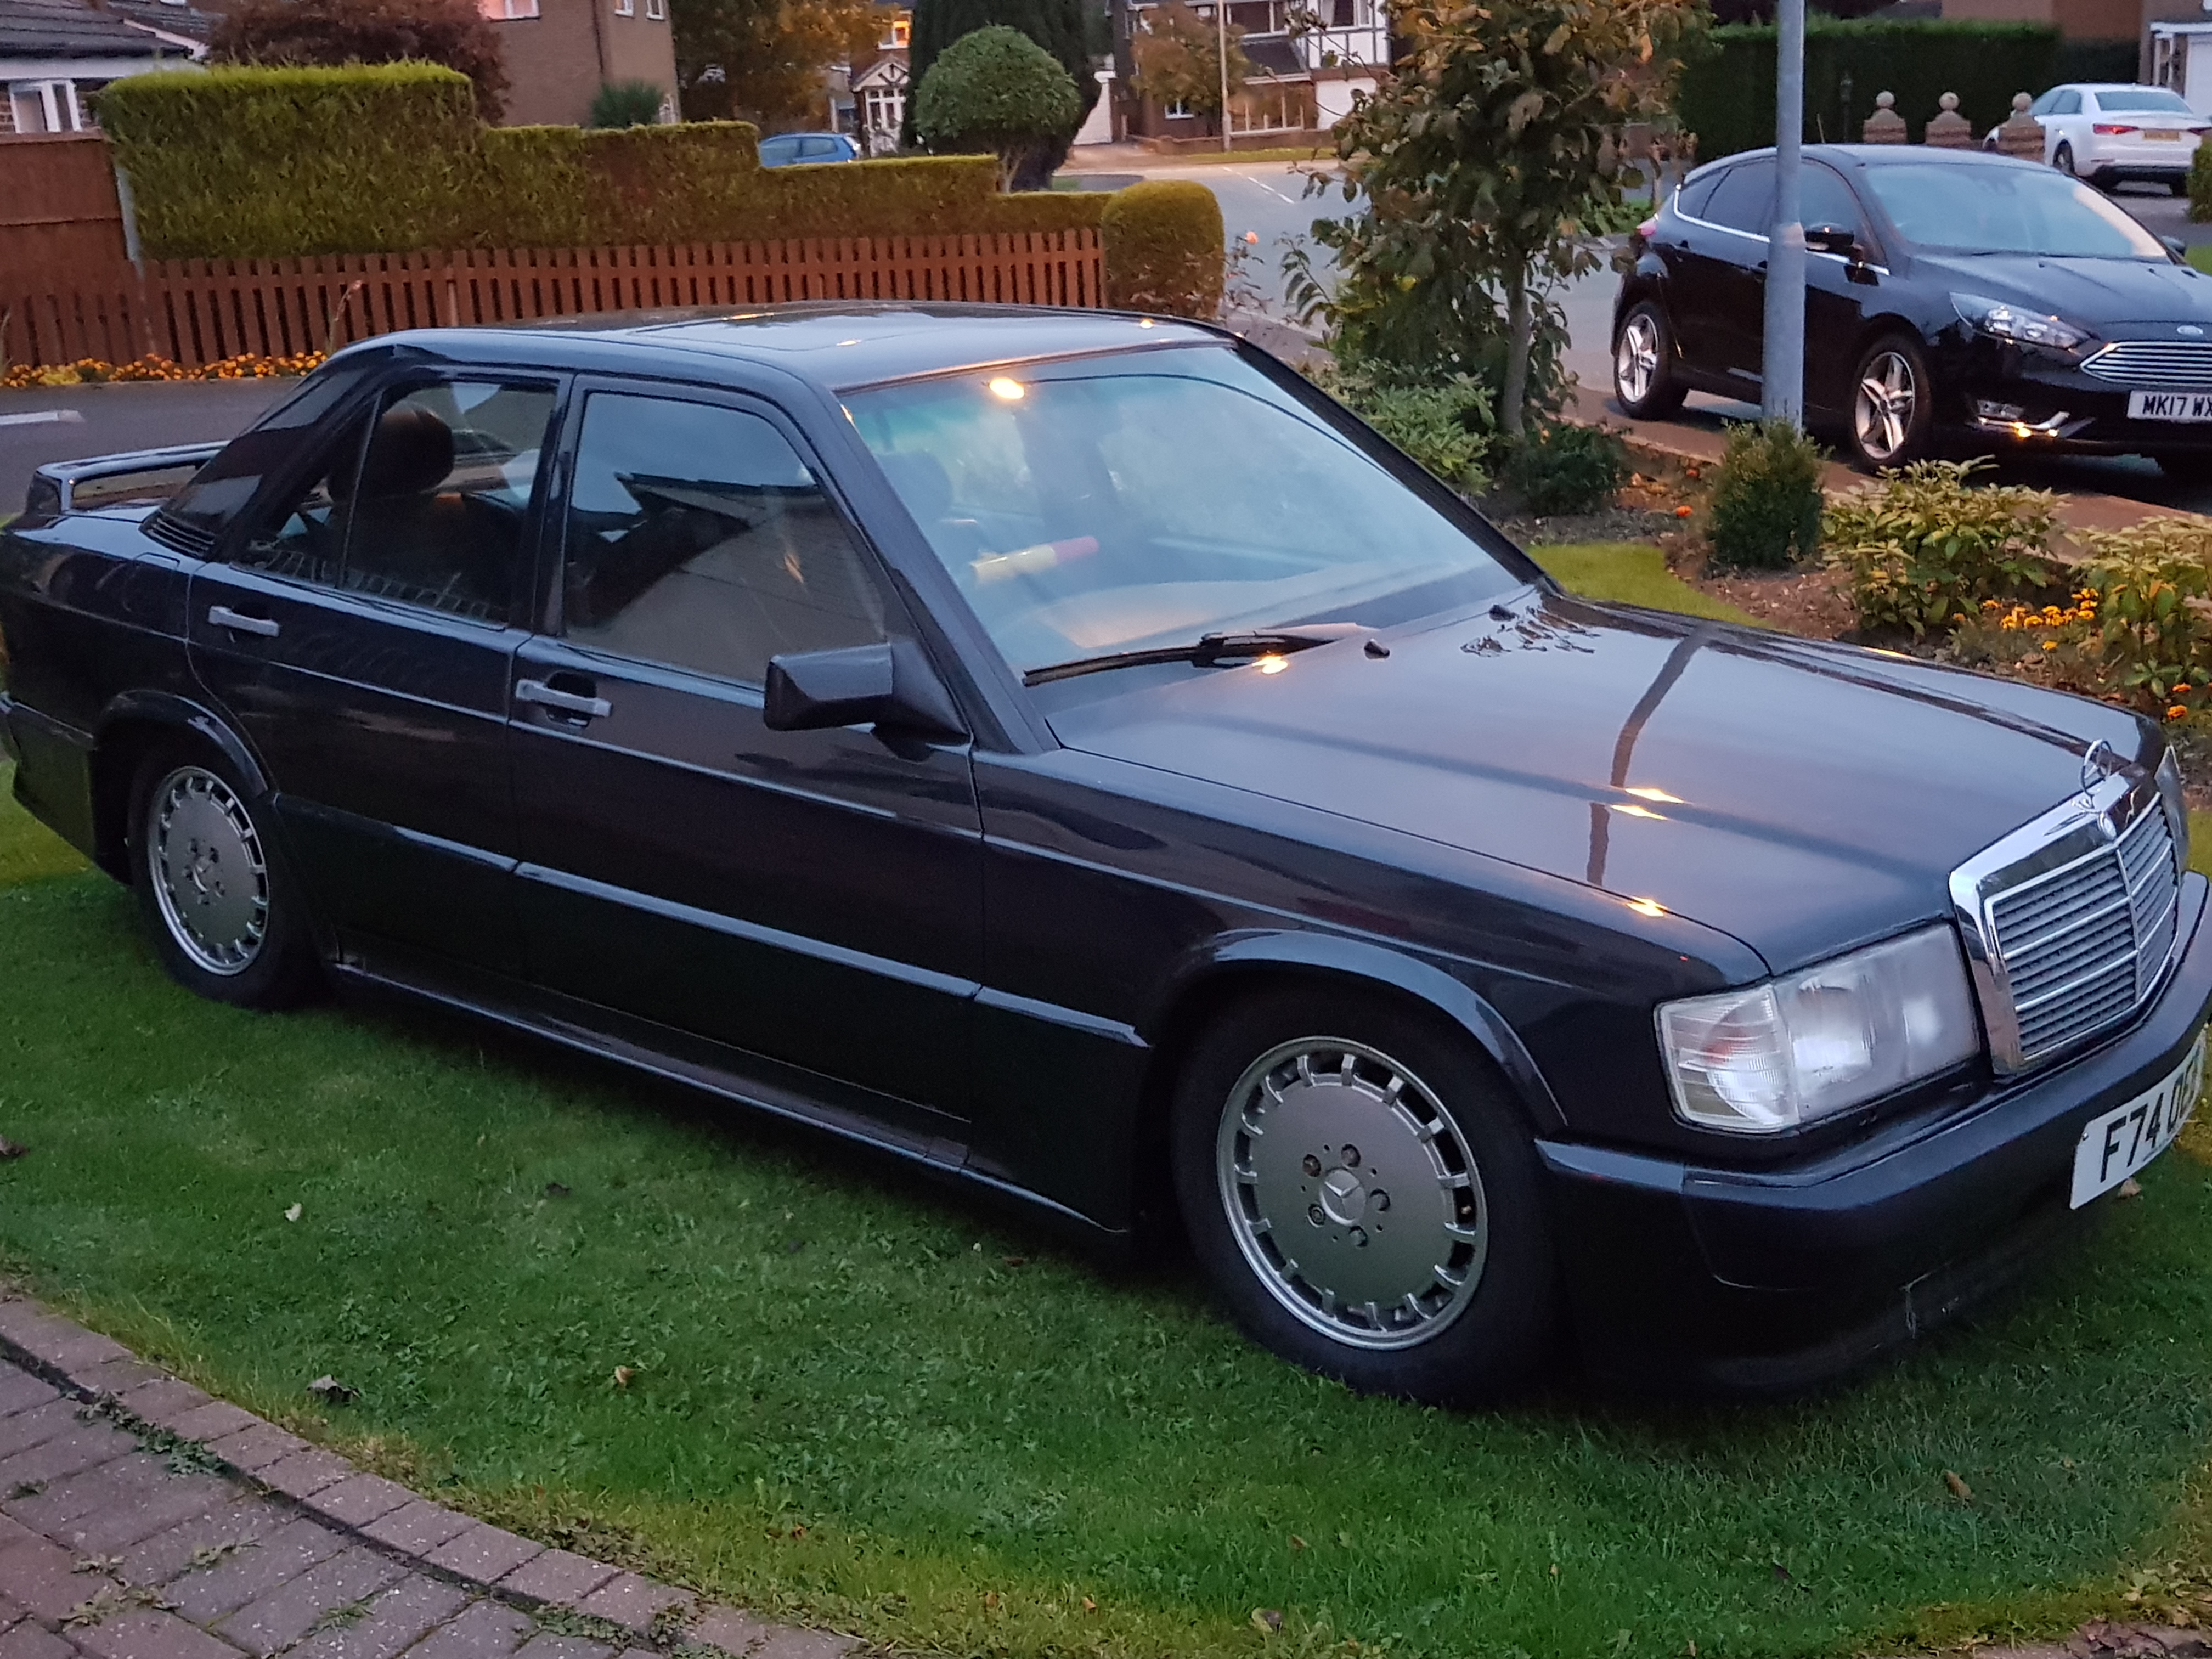 1989 Mercedes-Benz 190E 2.5 Cosworth 16v